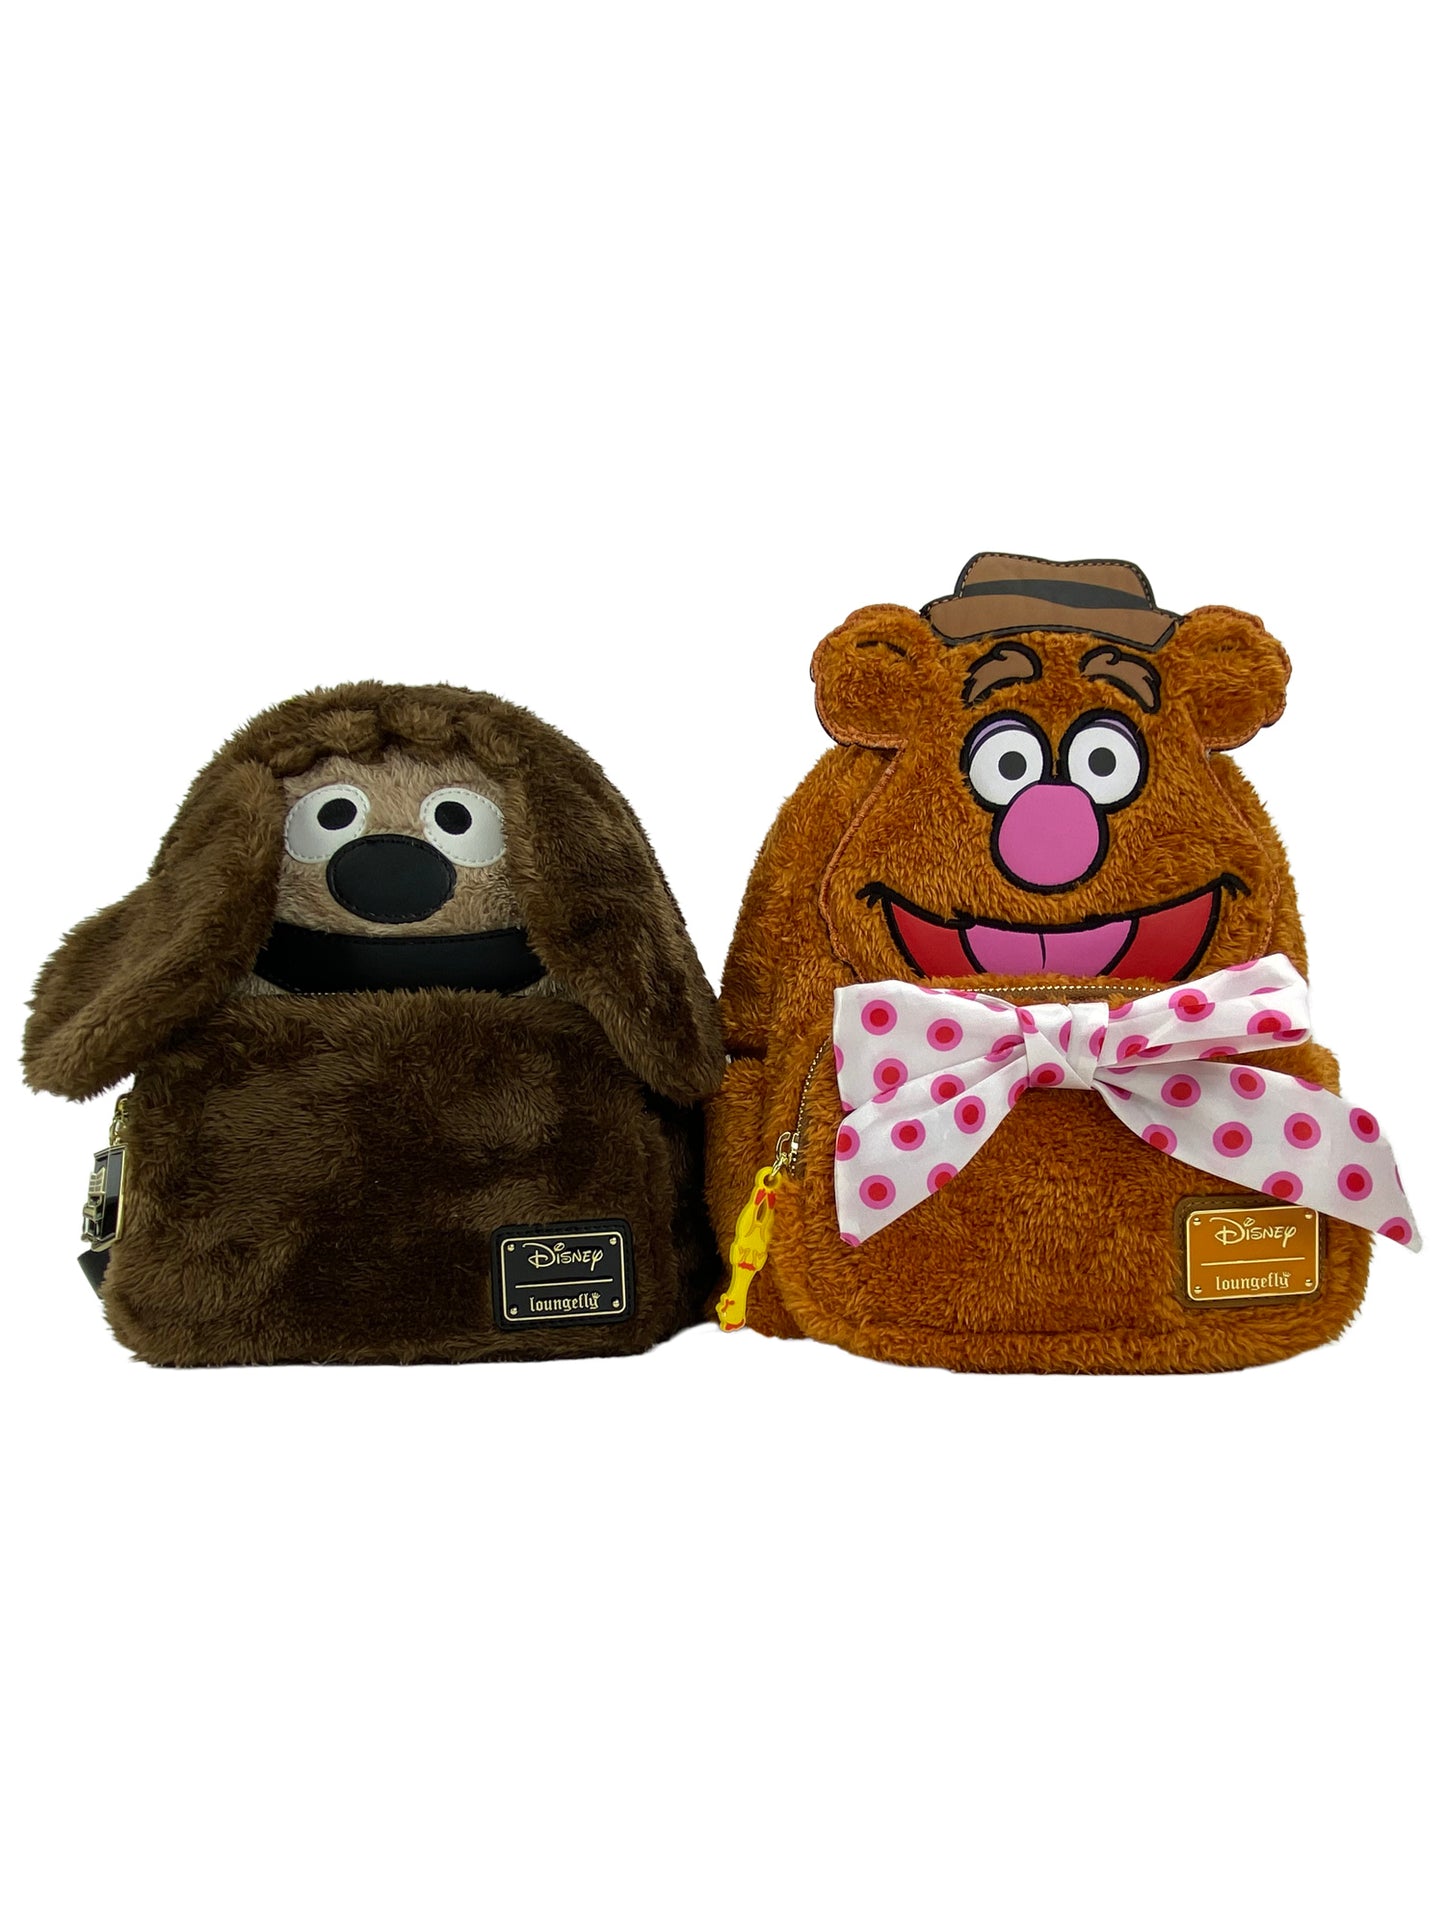 Loungefly x Disney Muppets Rowlf & Fozzie Mini Backpack 2-Piece Set